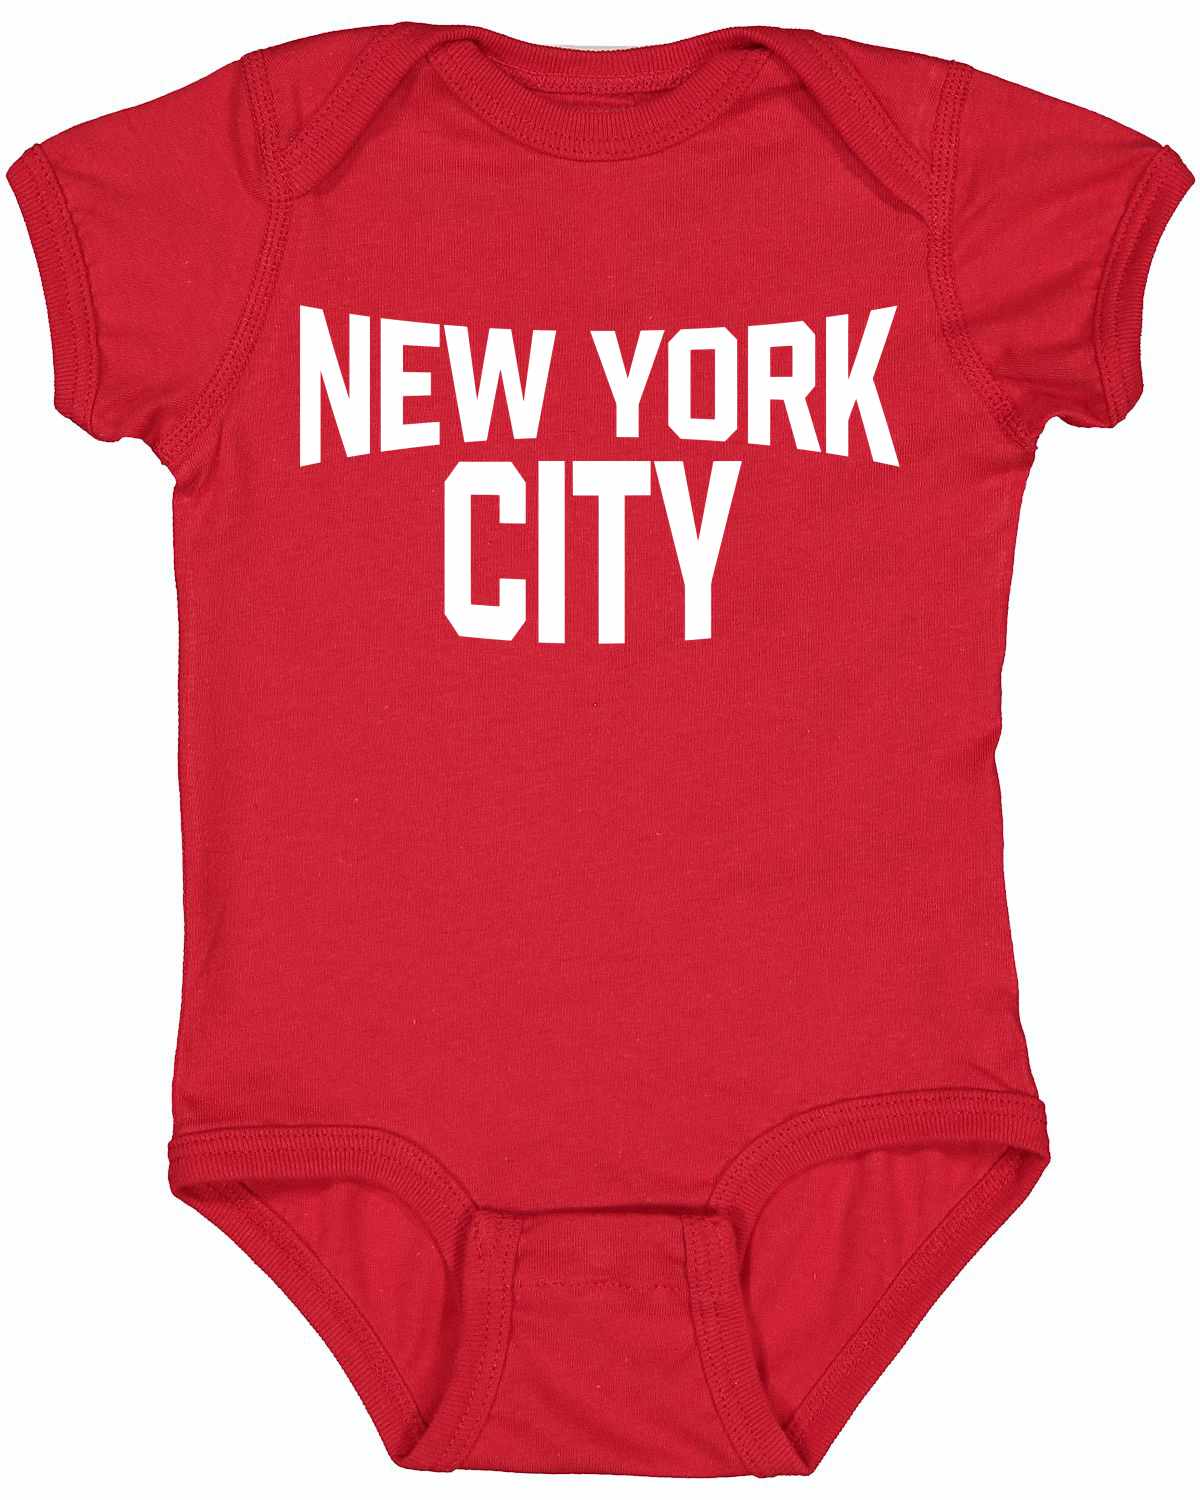 New York City on Infant BodySuit